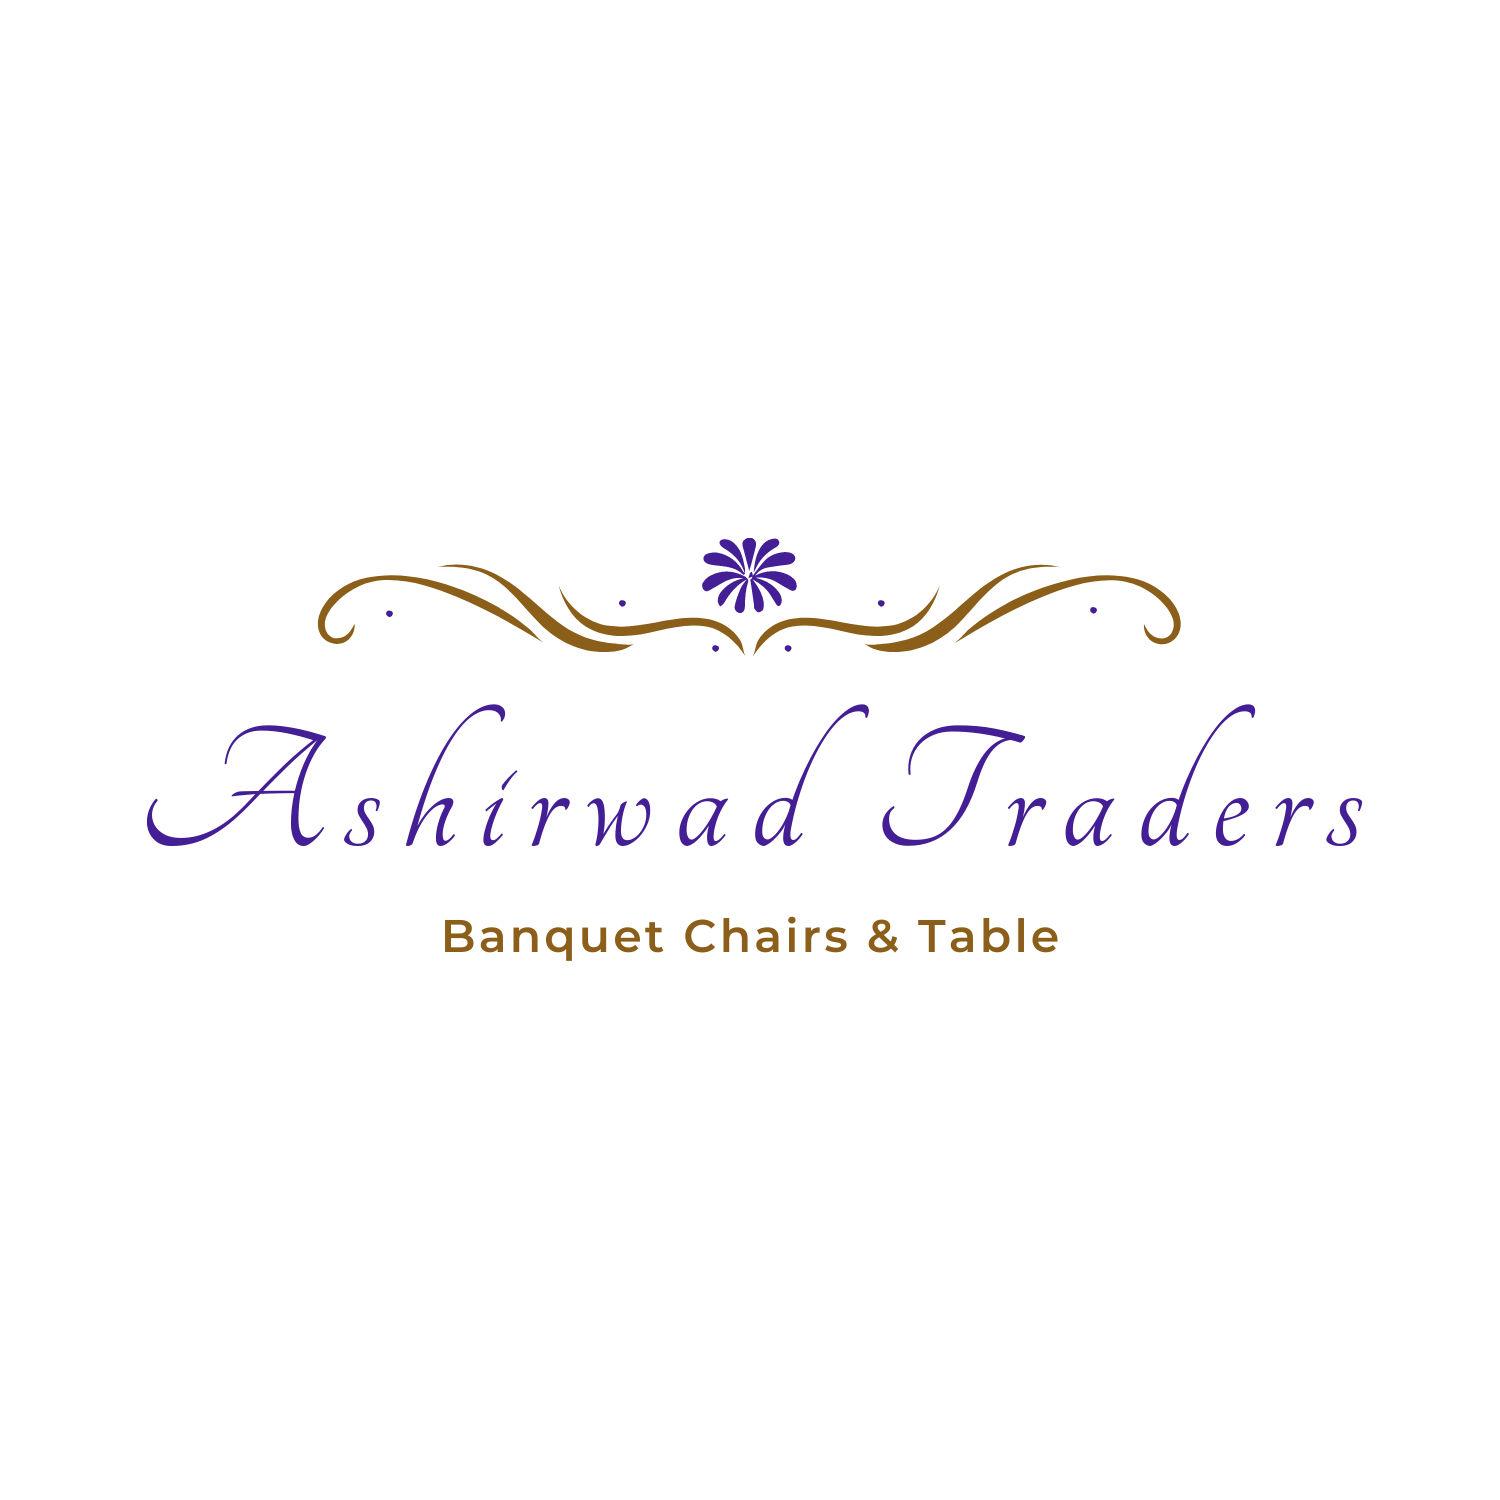 Ashirwad Traders